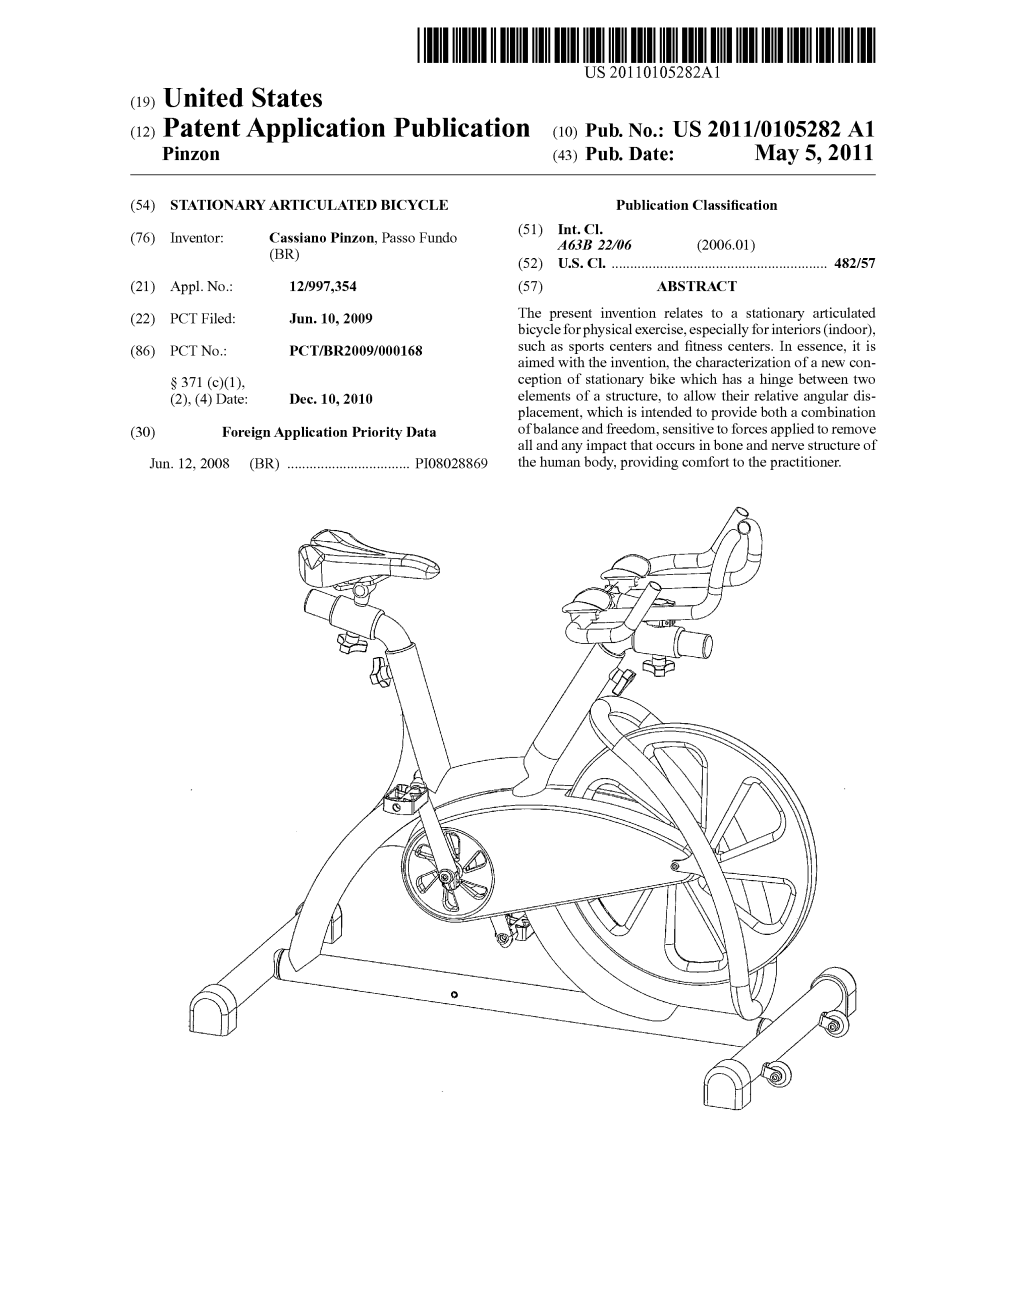 (12) Patent Application Publication (10) Pub. No.: US 2011/0105282 A1 Pinzon (43) Pub